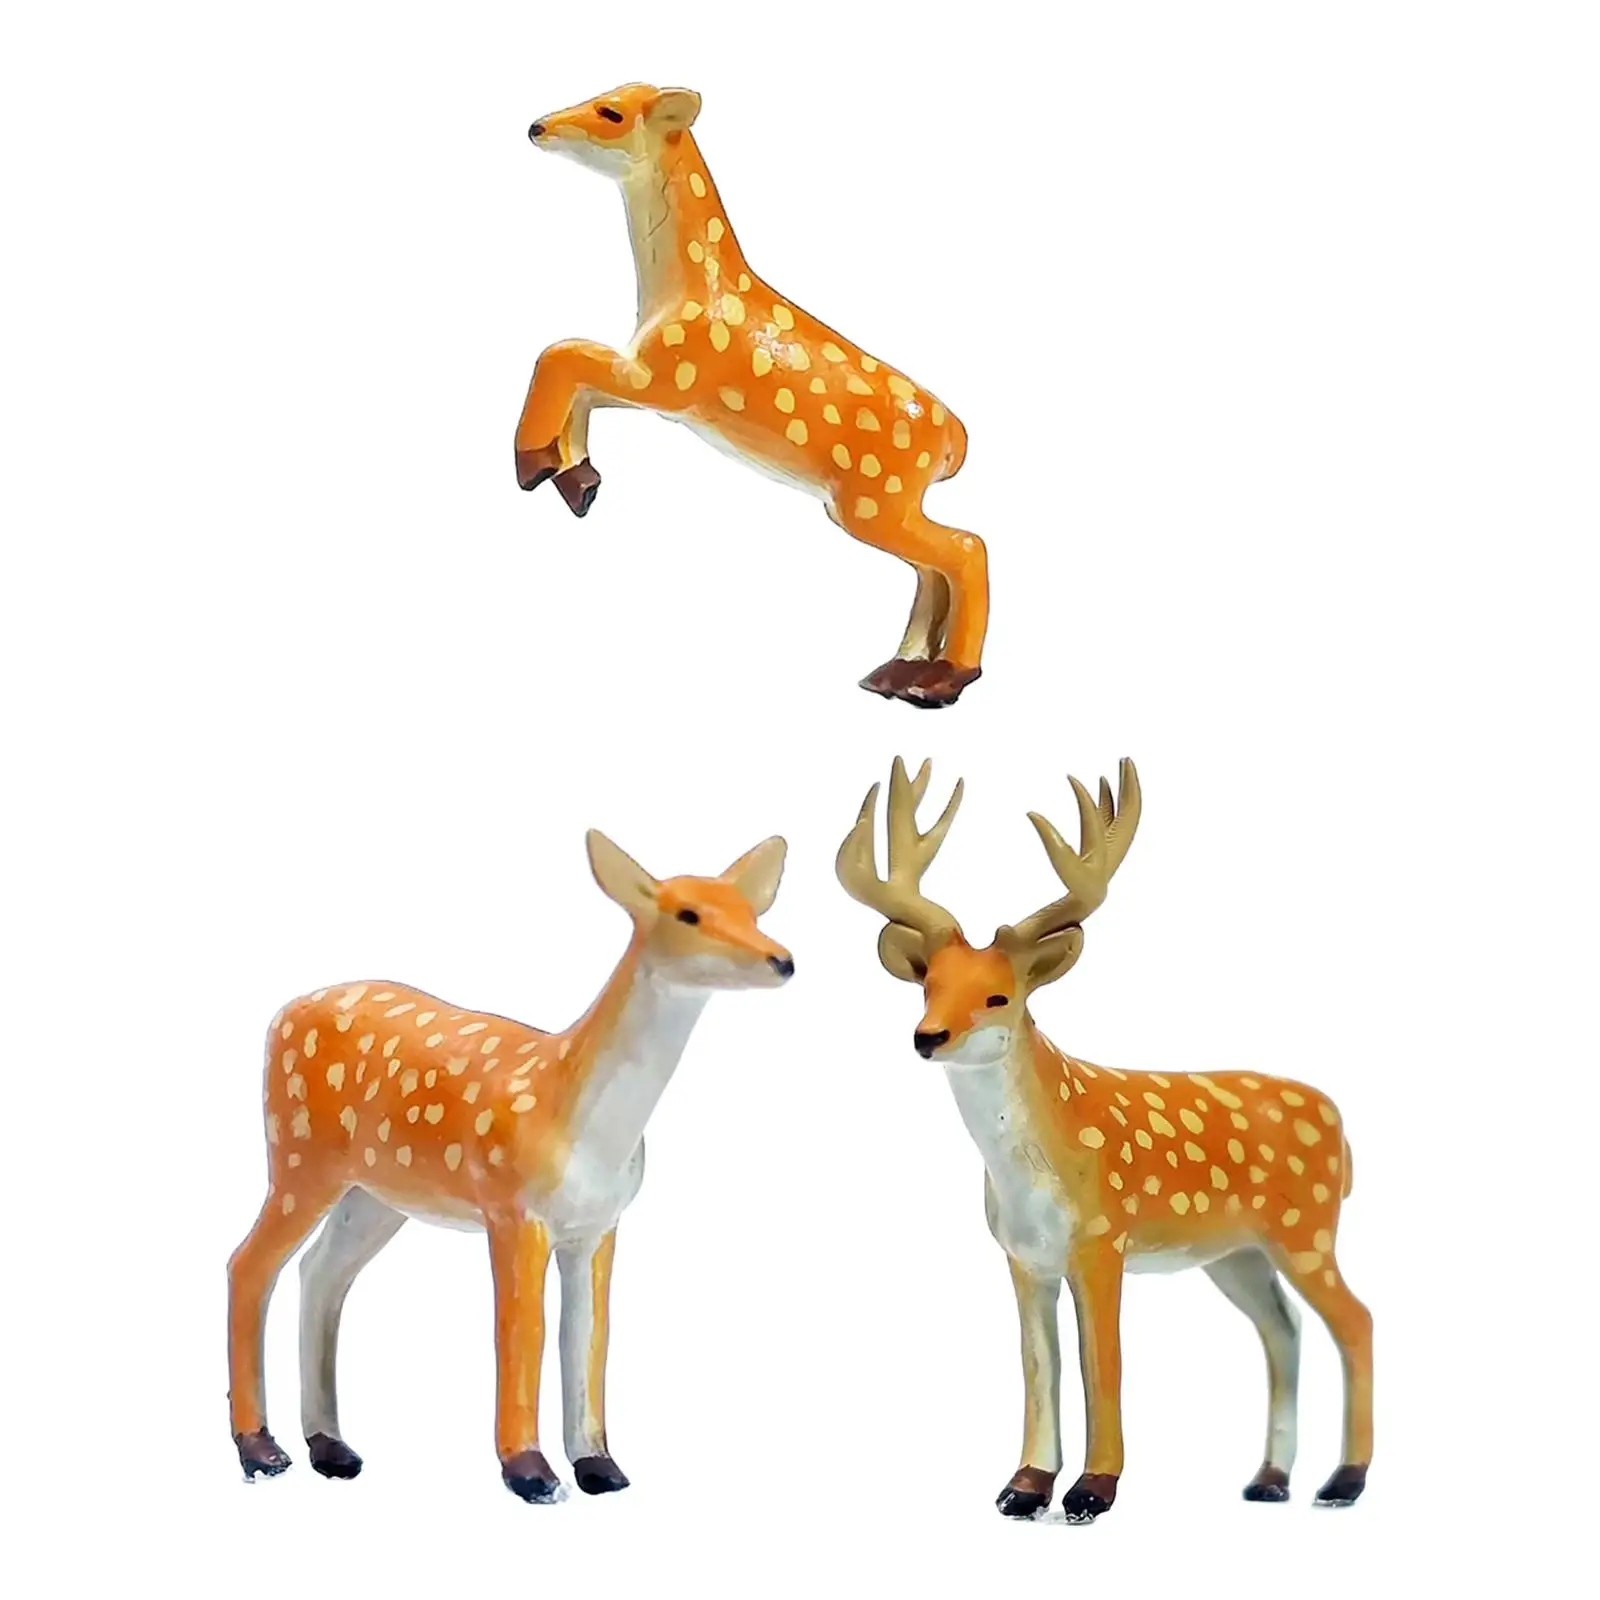 3x 1/64 Deer Figures Woodland Animal Deer Model Resin Statue Forest Animals Figures for Crafts DIY Scene Ornament Projects Decor